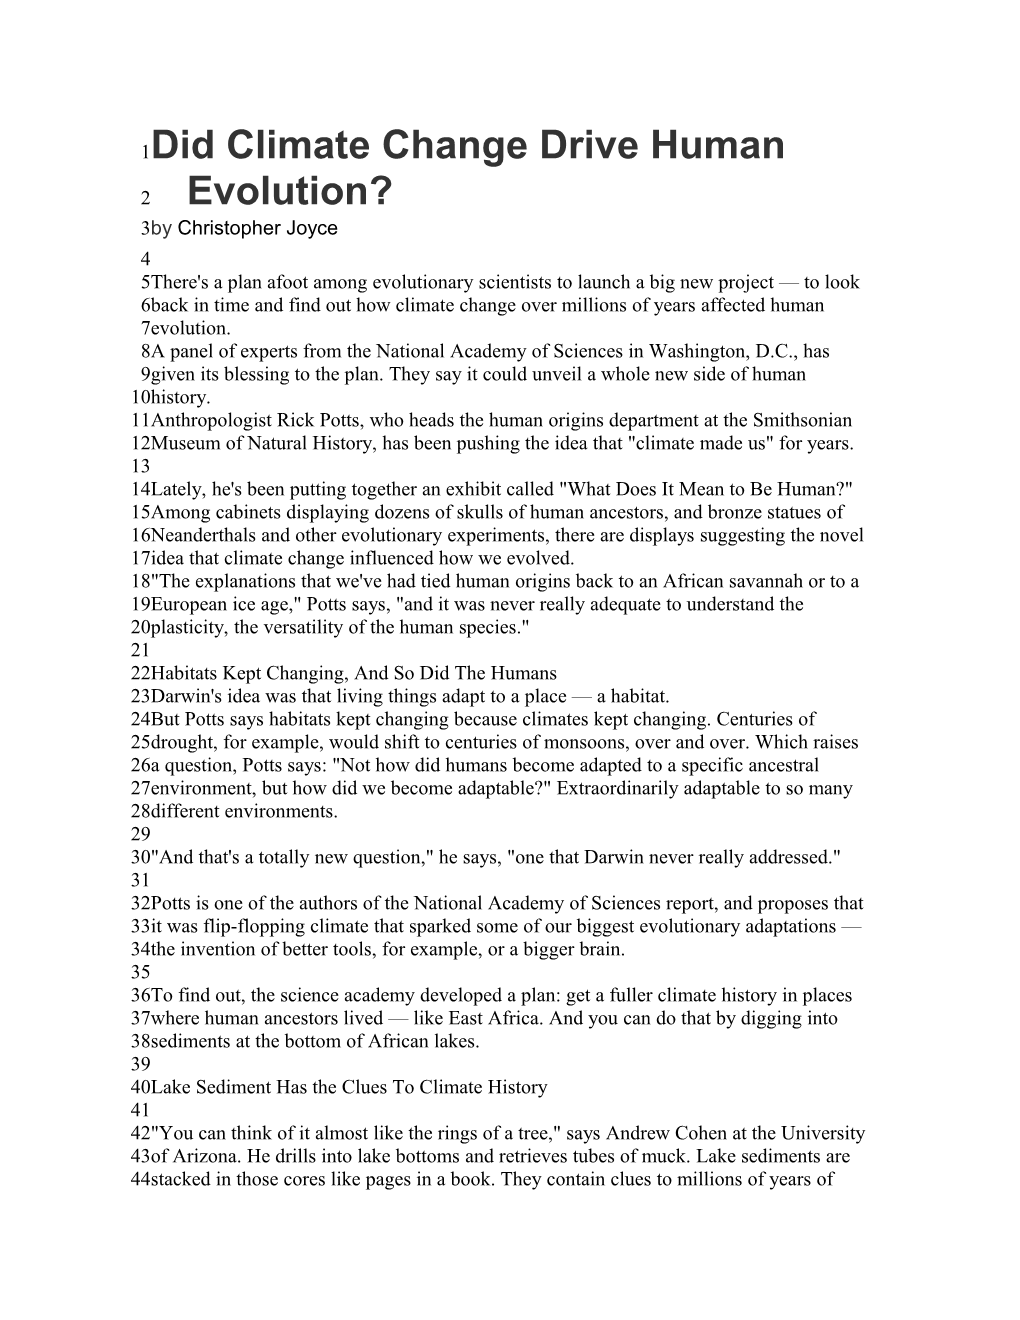 Did Climate Change Drive Human Evolution